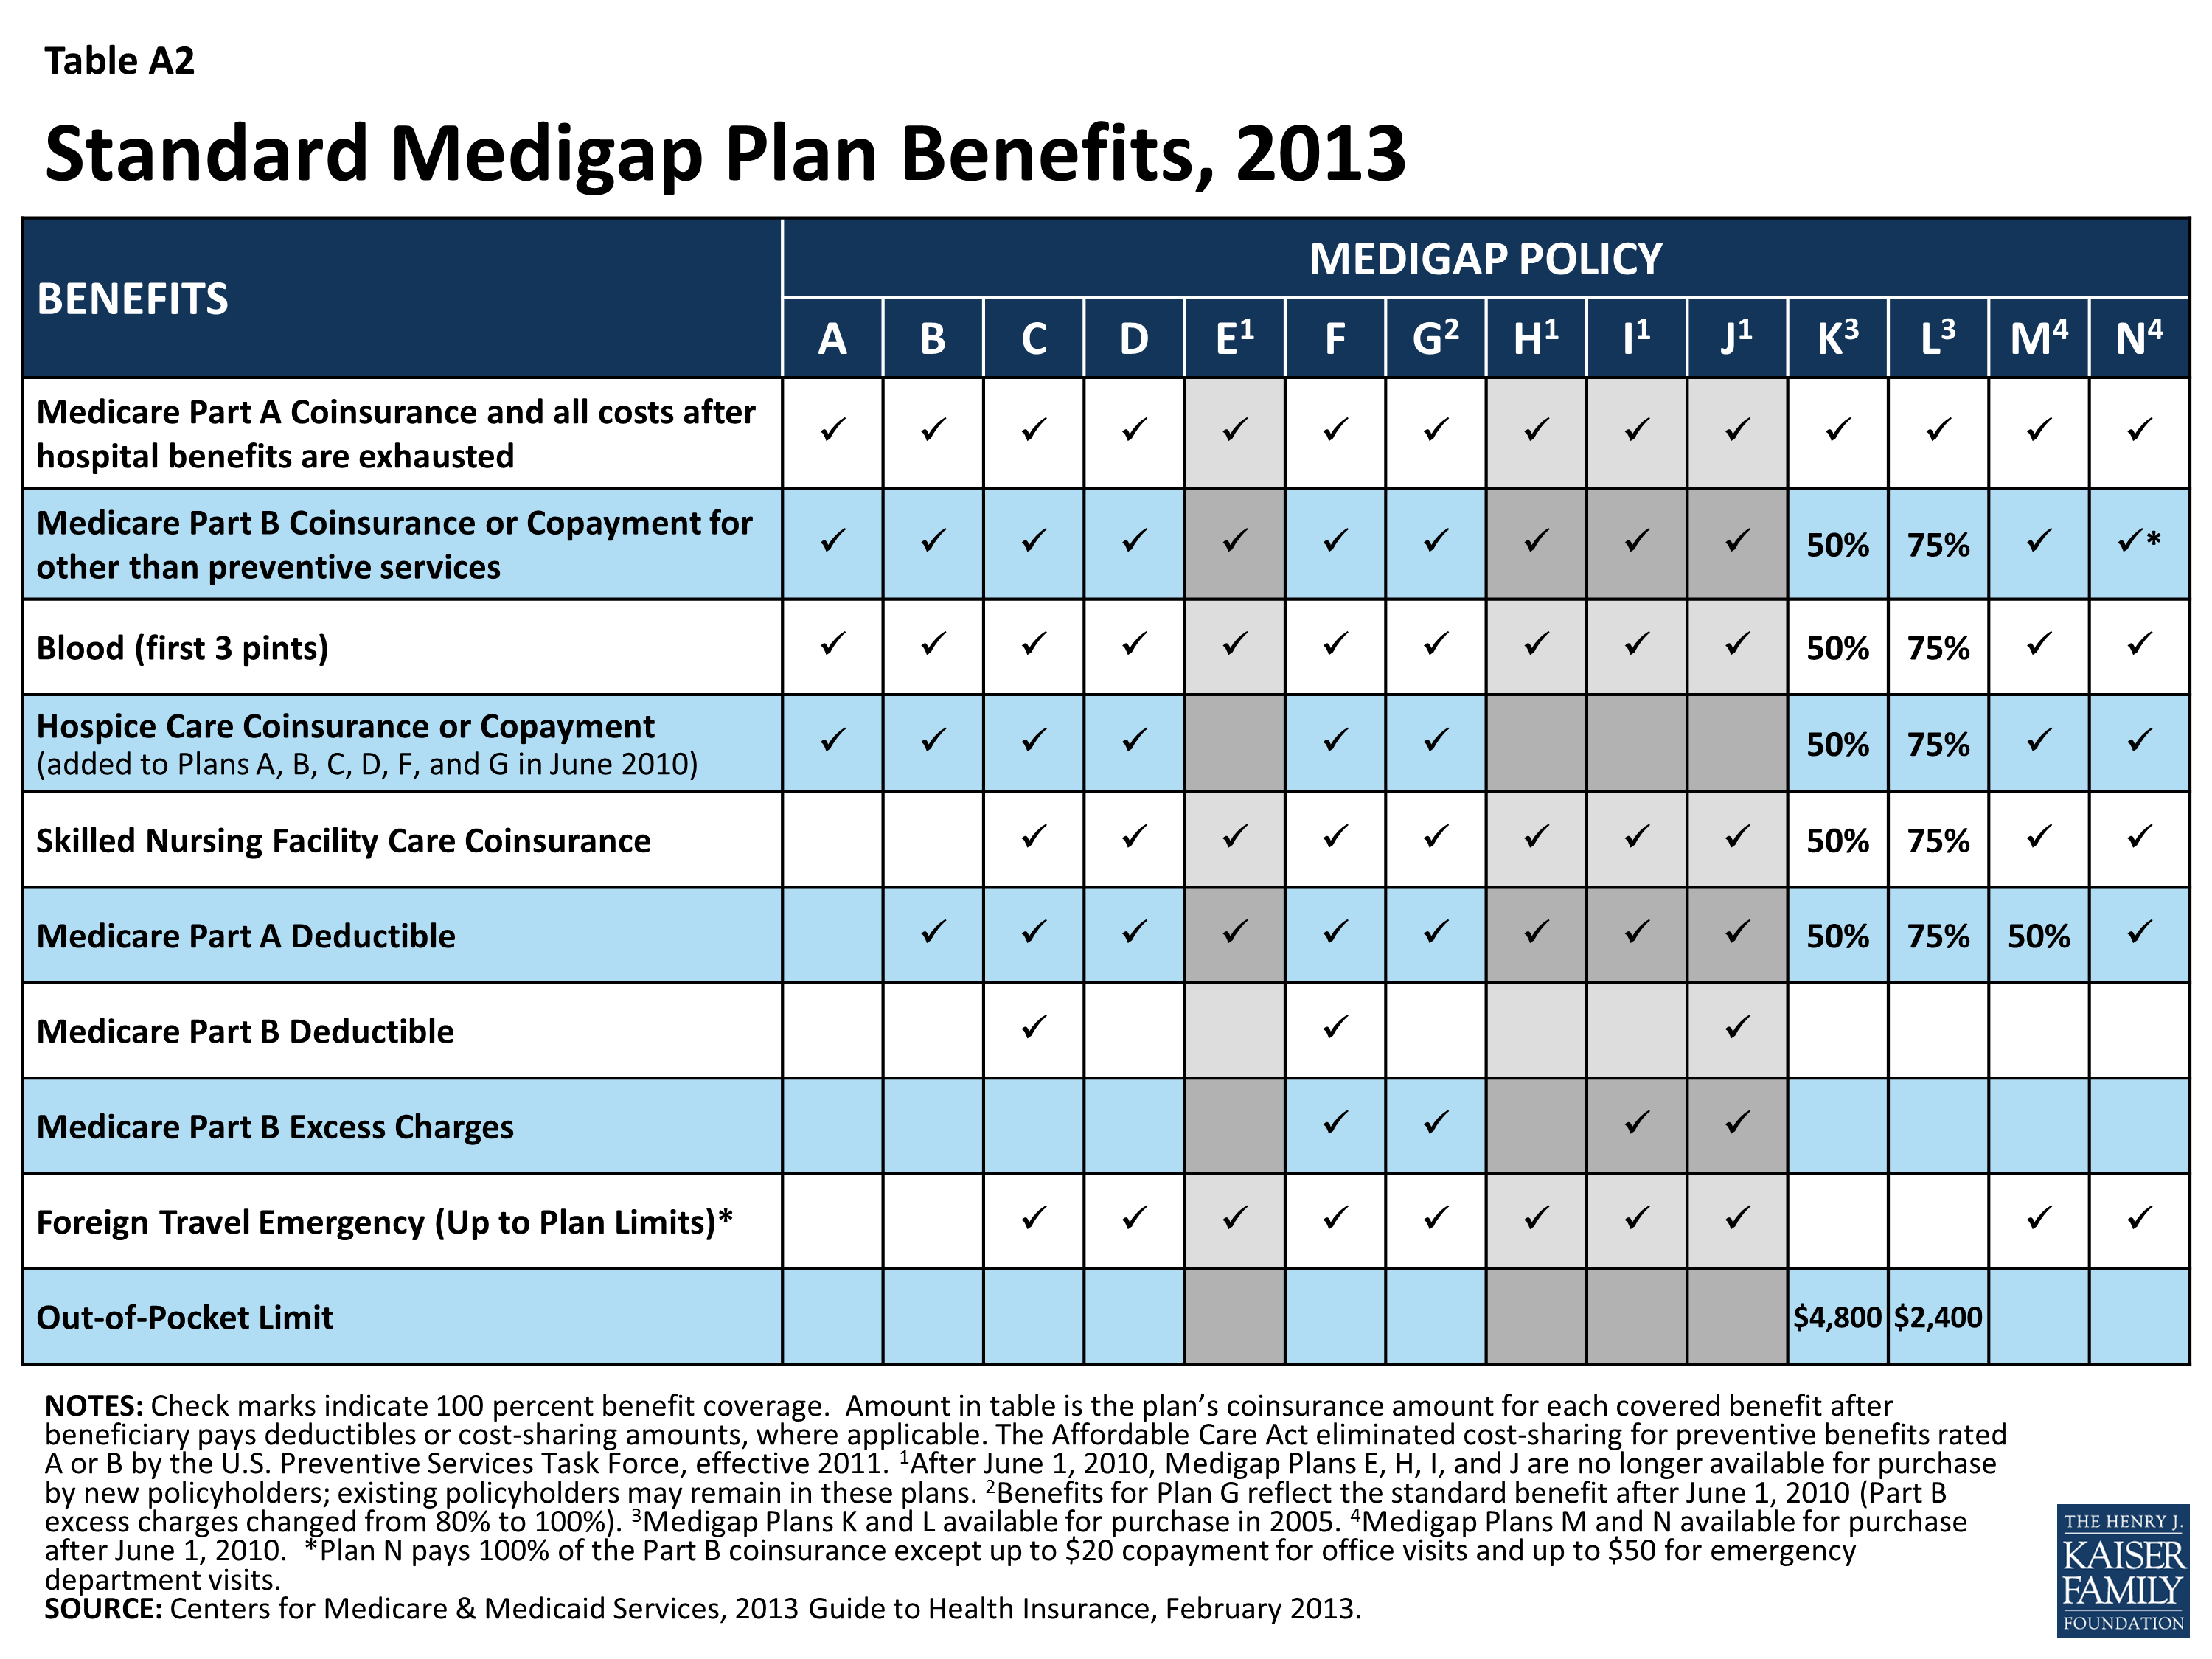 Medigap Reform Setting the Context for Understanding Recent Proposals